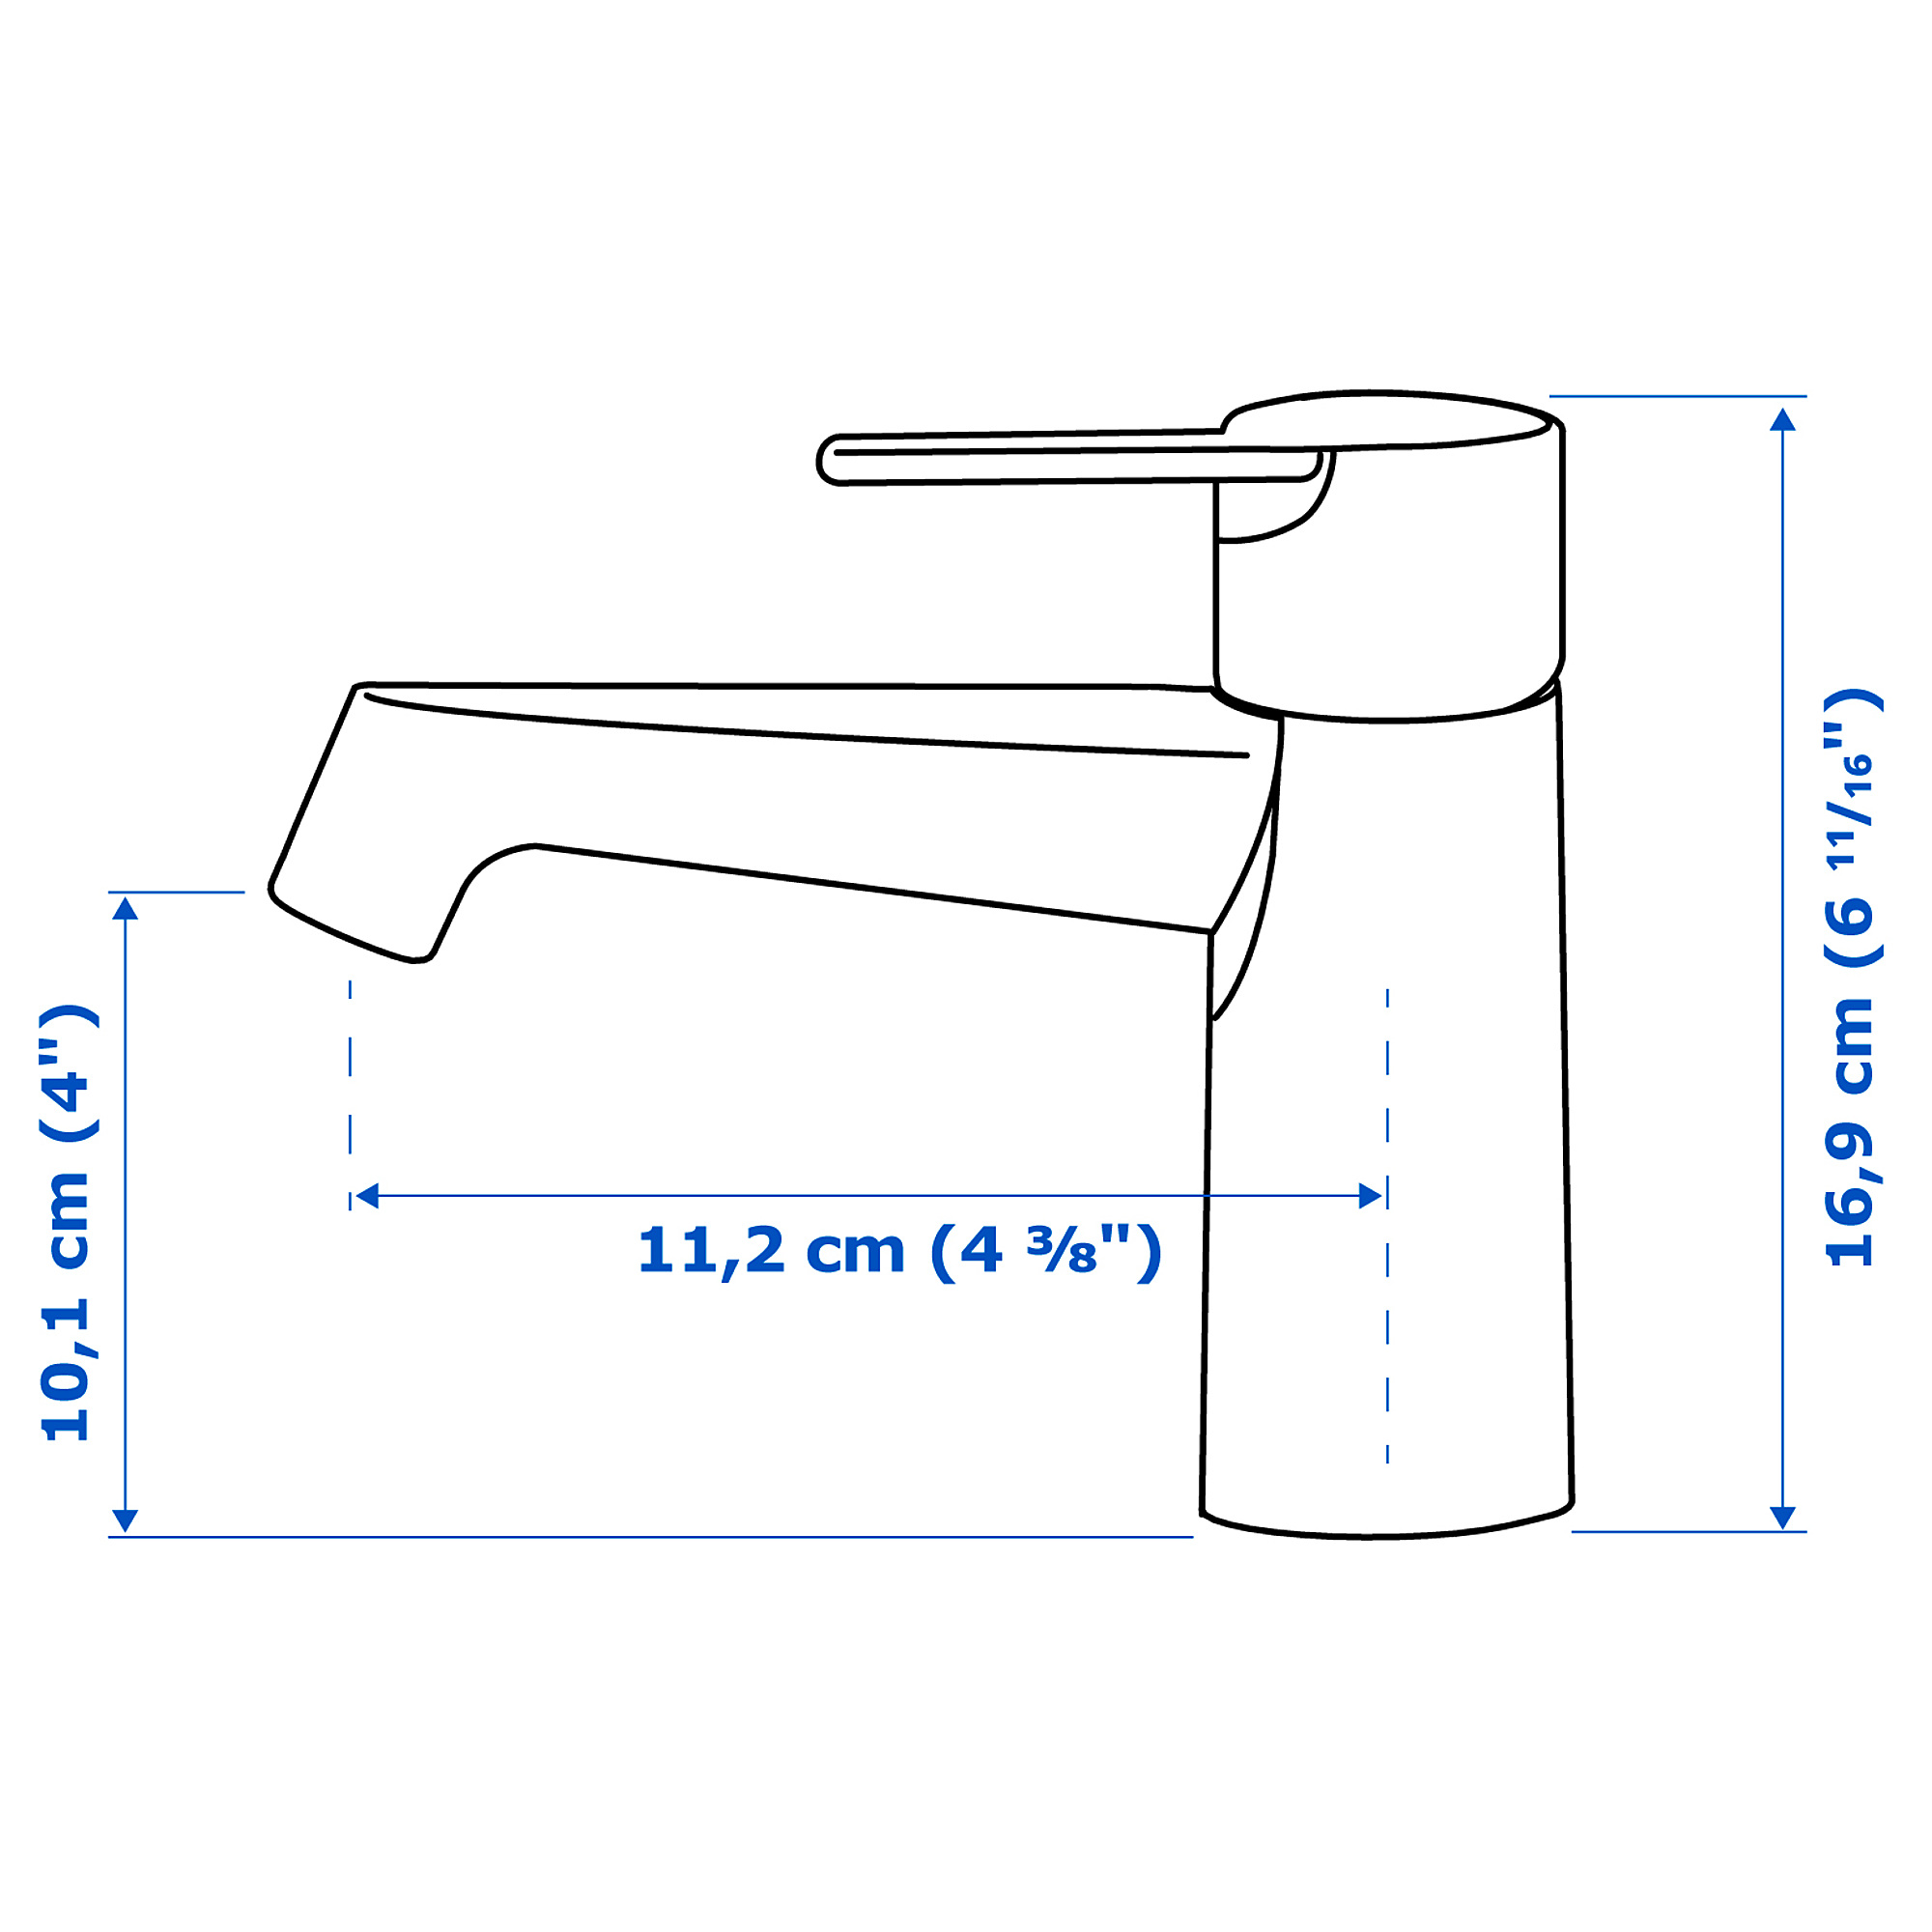 BROGRUND wash-basin mixer tap